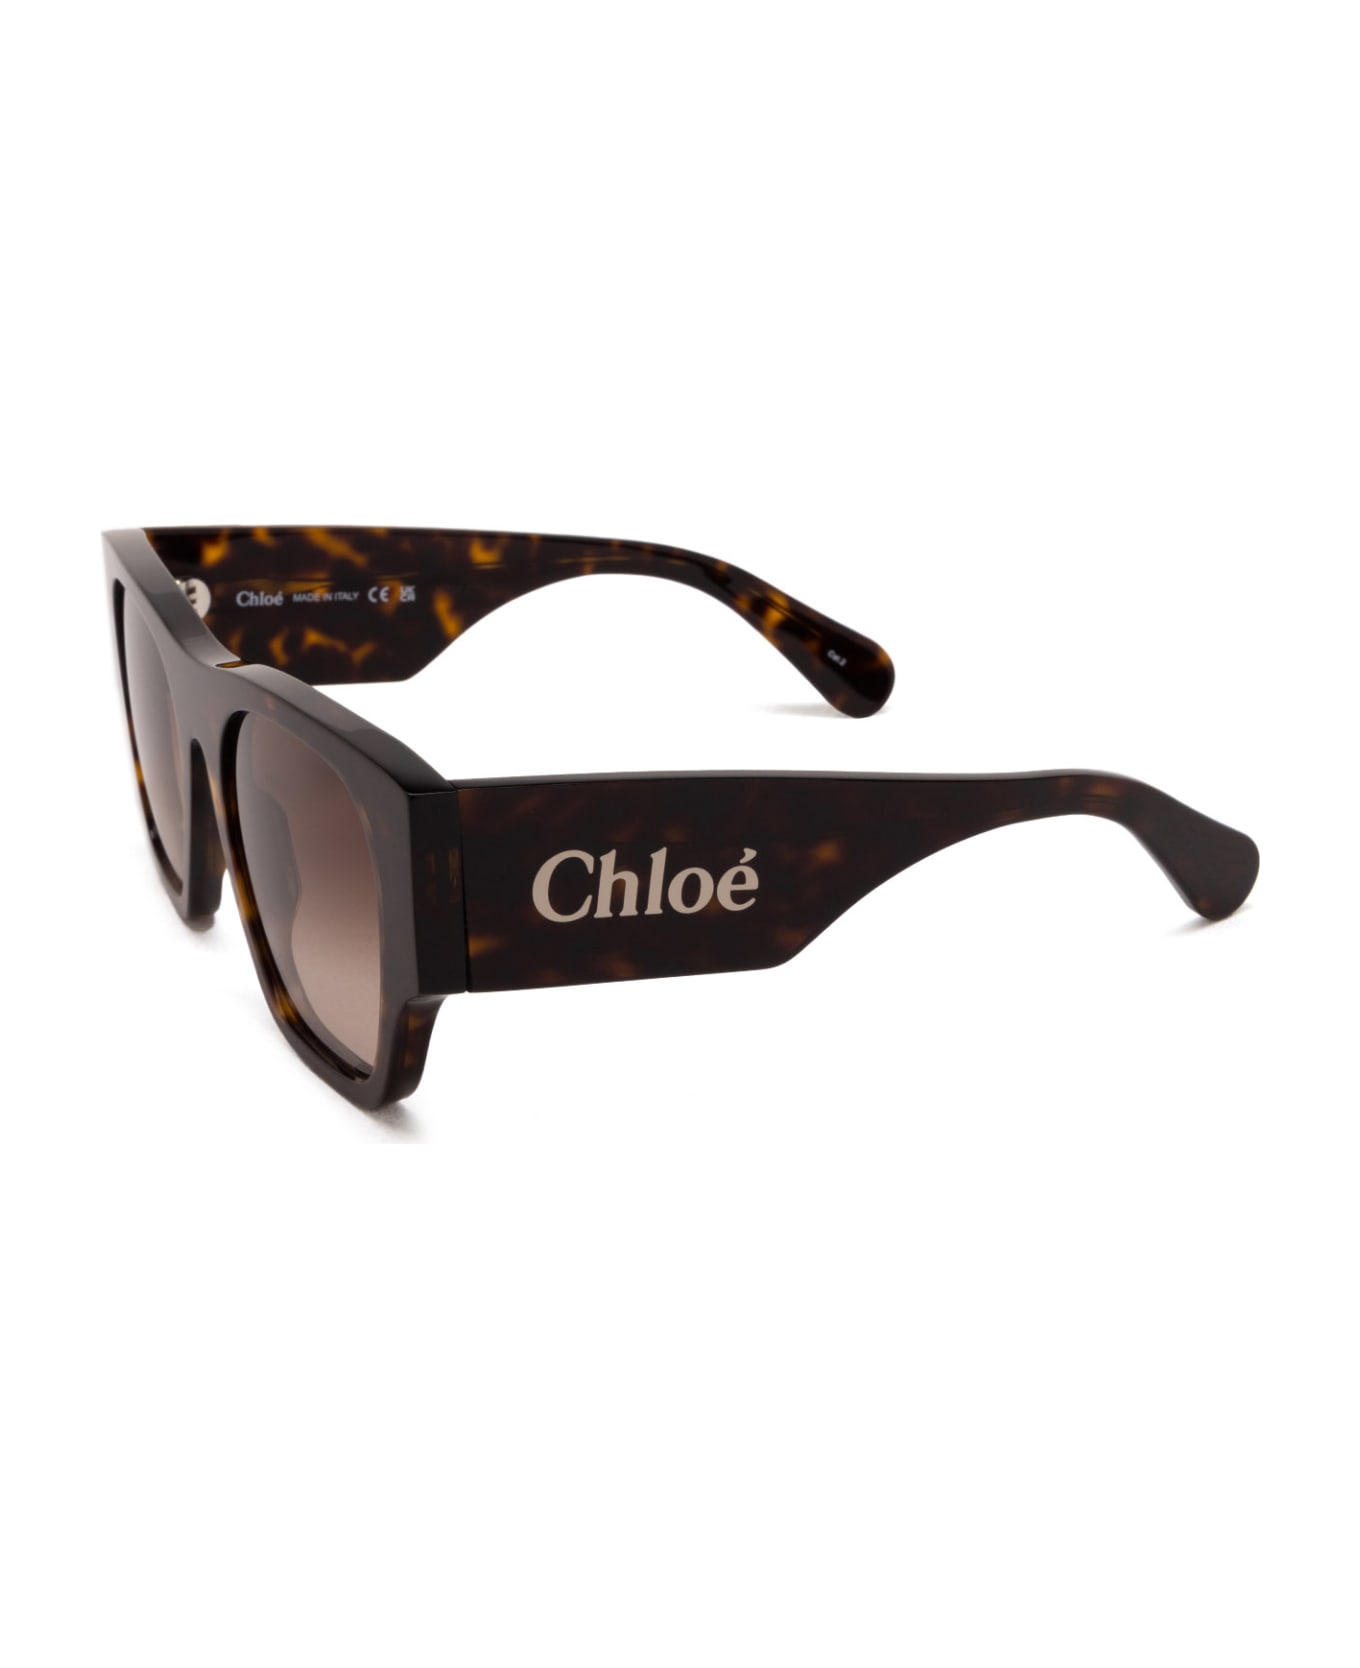 Chloé Eyewear Ch0233s Havana Sunglasses - Havana